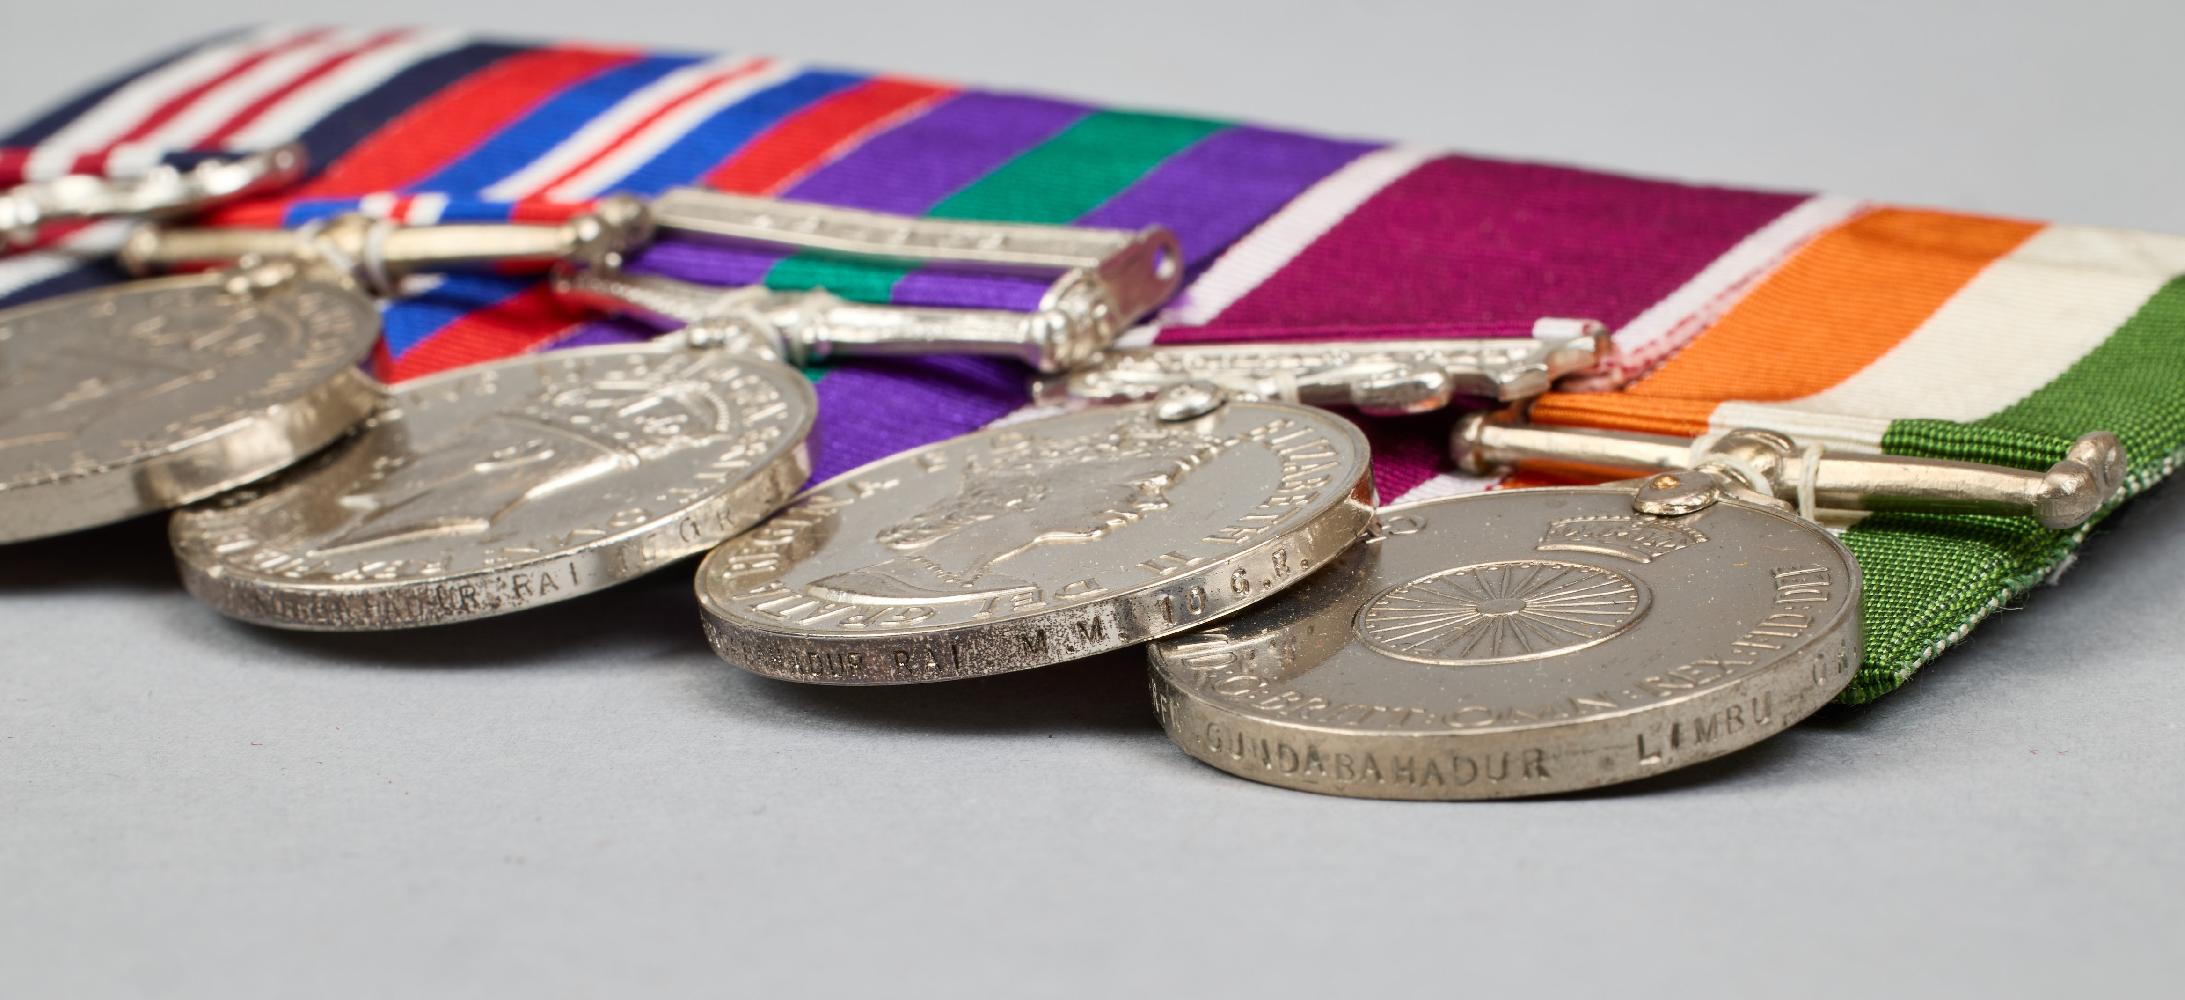 Great Britain : Military Medal Group of 5 to Sgt. . Gundabahadur Rai, 10th G.R. (Gurkha Rifles). - Image 4 of 11